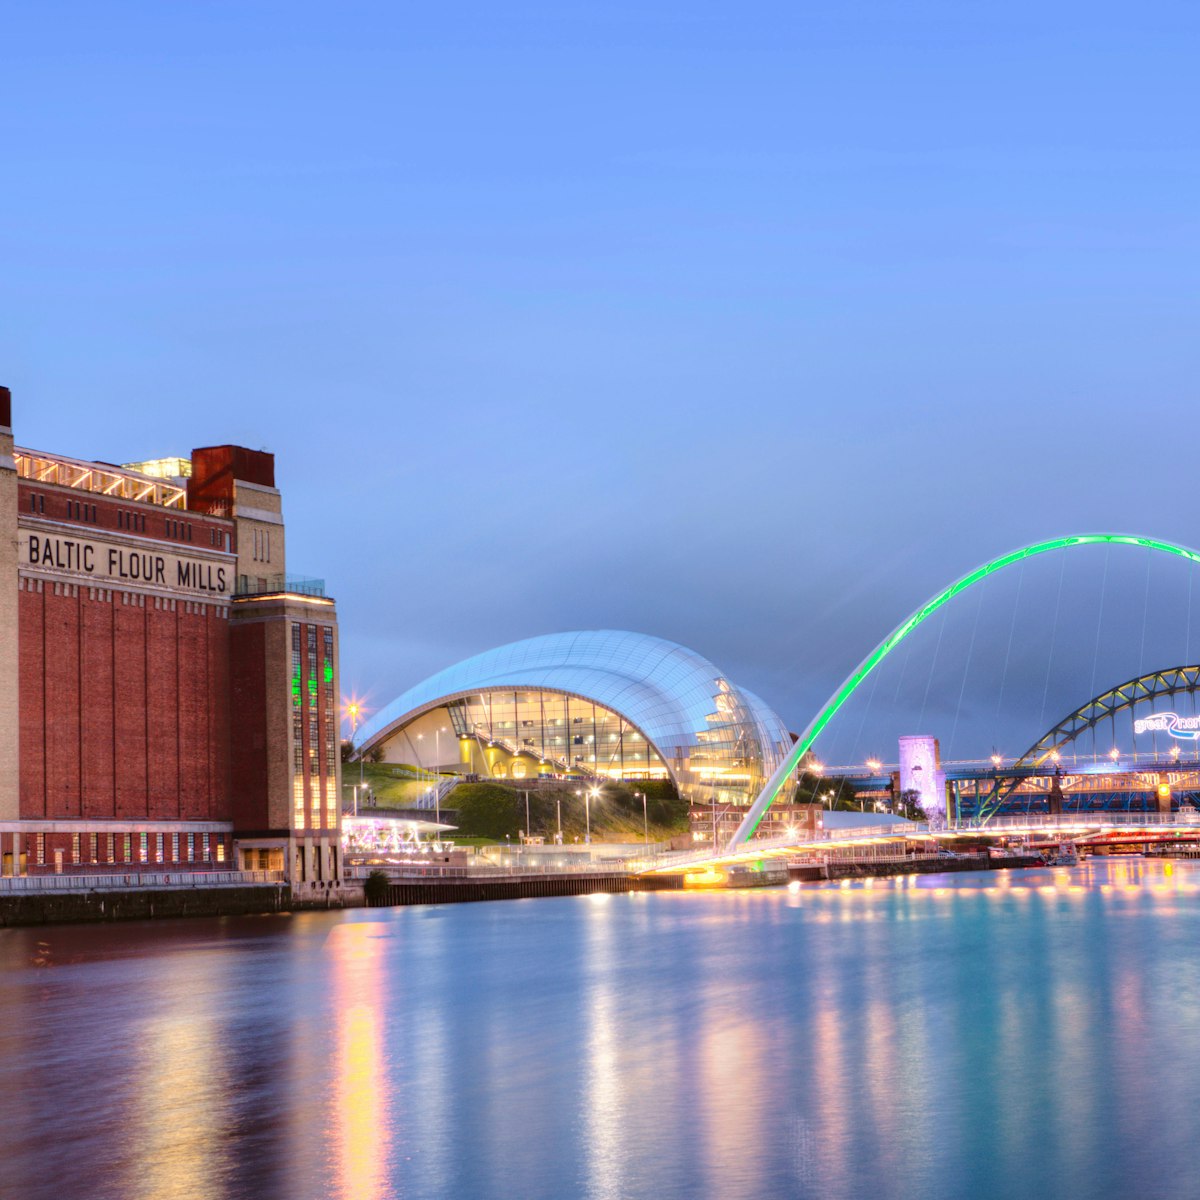 The BALTIC Centre for Contemporary Art, Millennium Bridge, Tyne Bridge and Sage Gateshead, Tyne and Wear, UK